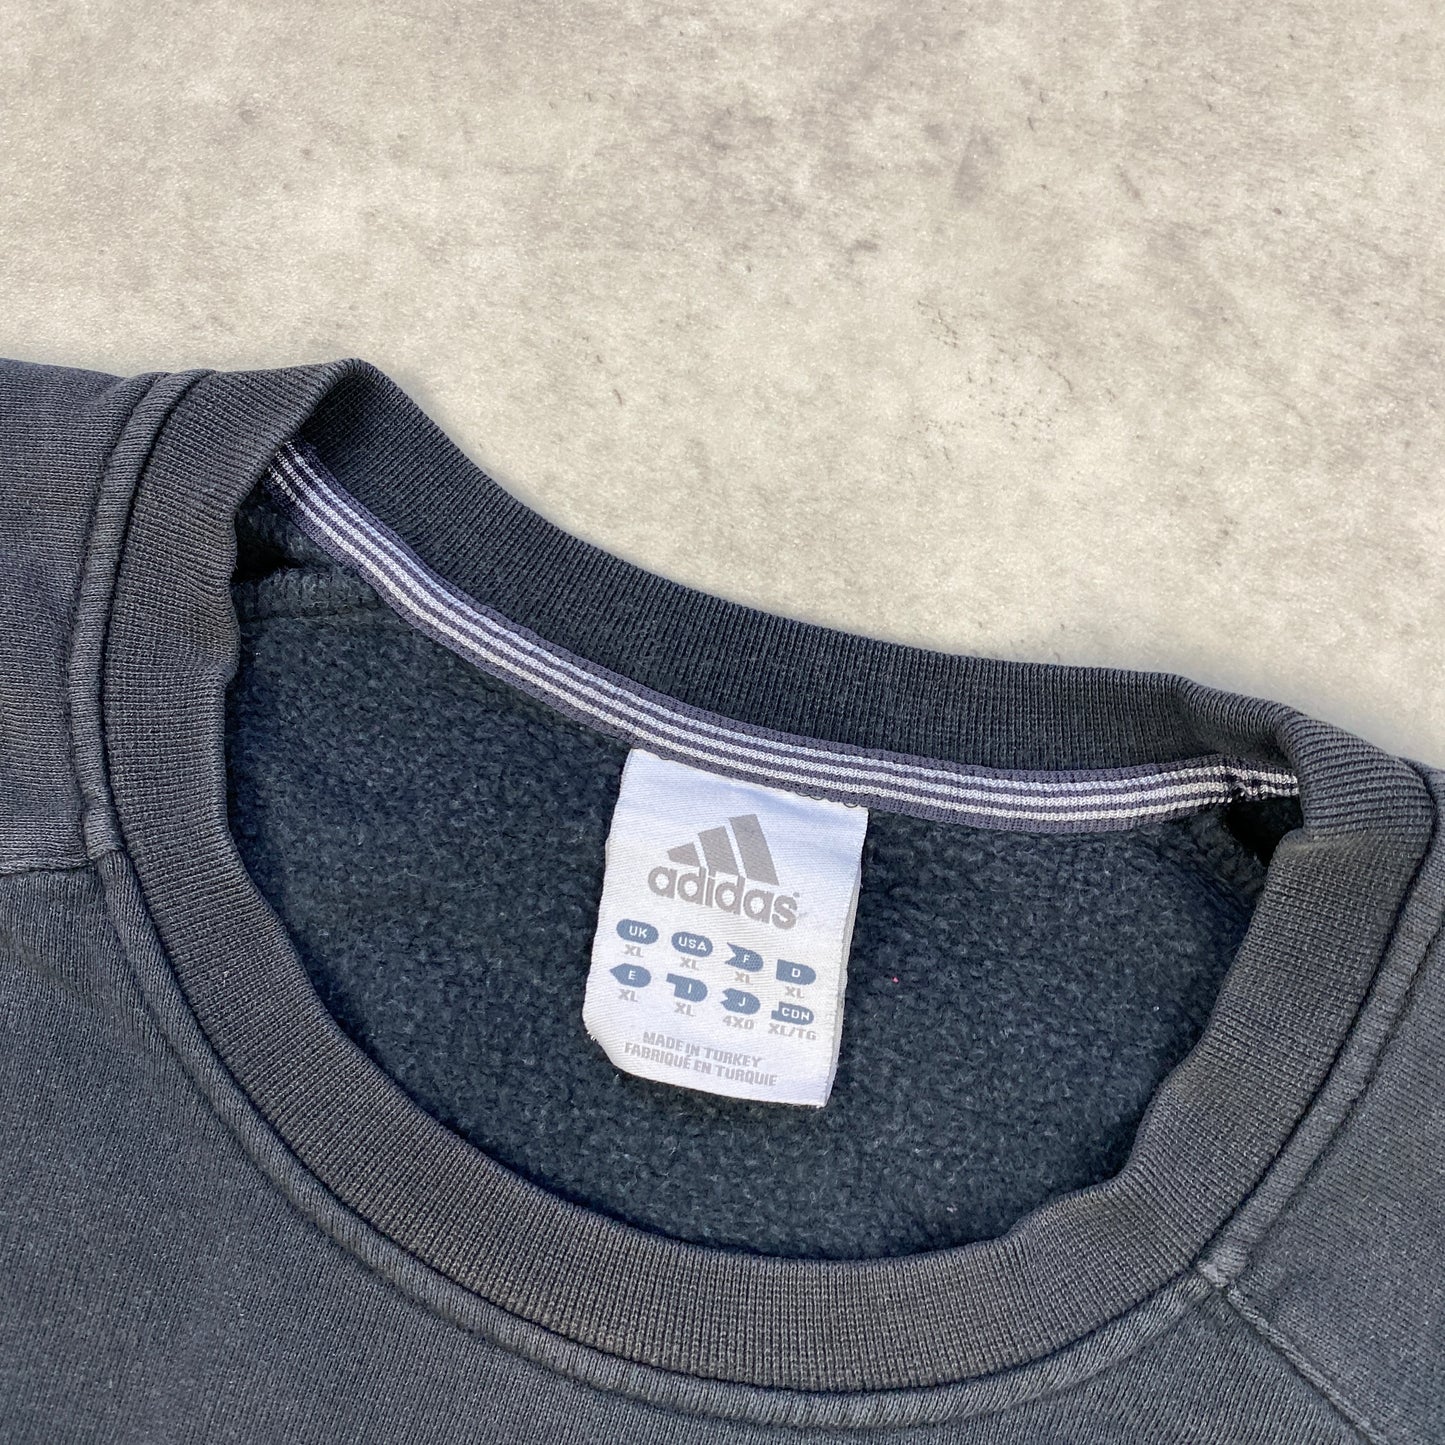 Adidas heavyweight sweater (XL)